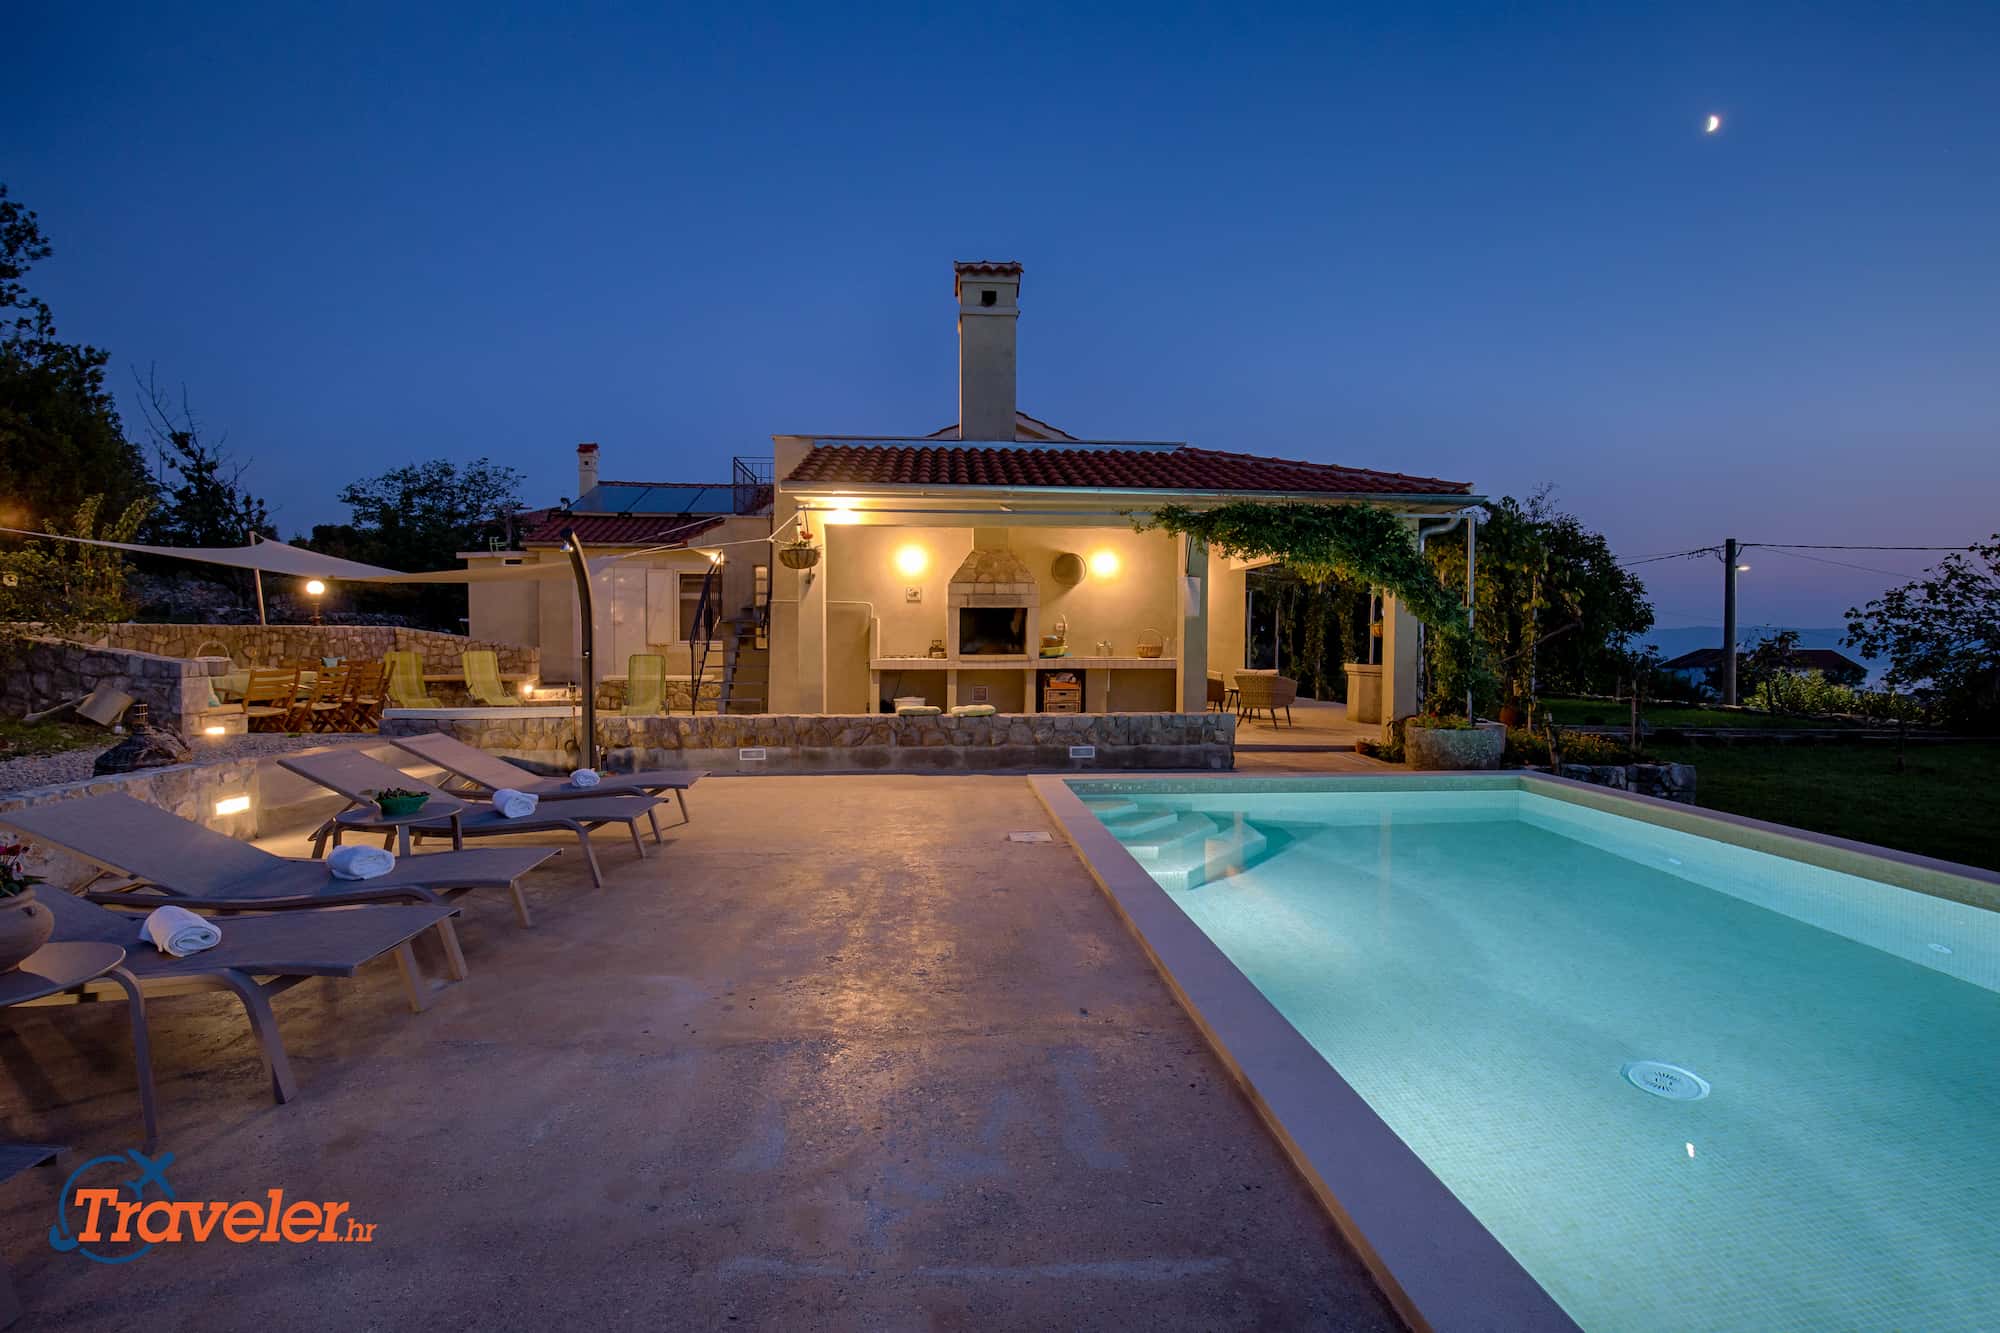 Romantische villa mit Pool, schöne Natur, Meerblick